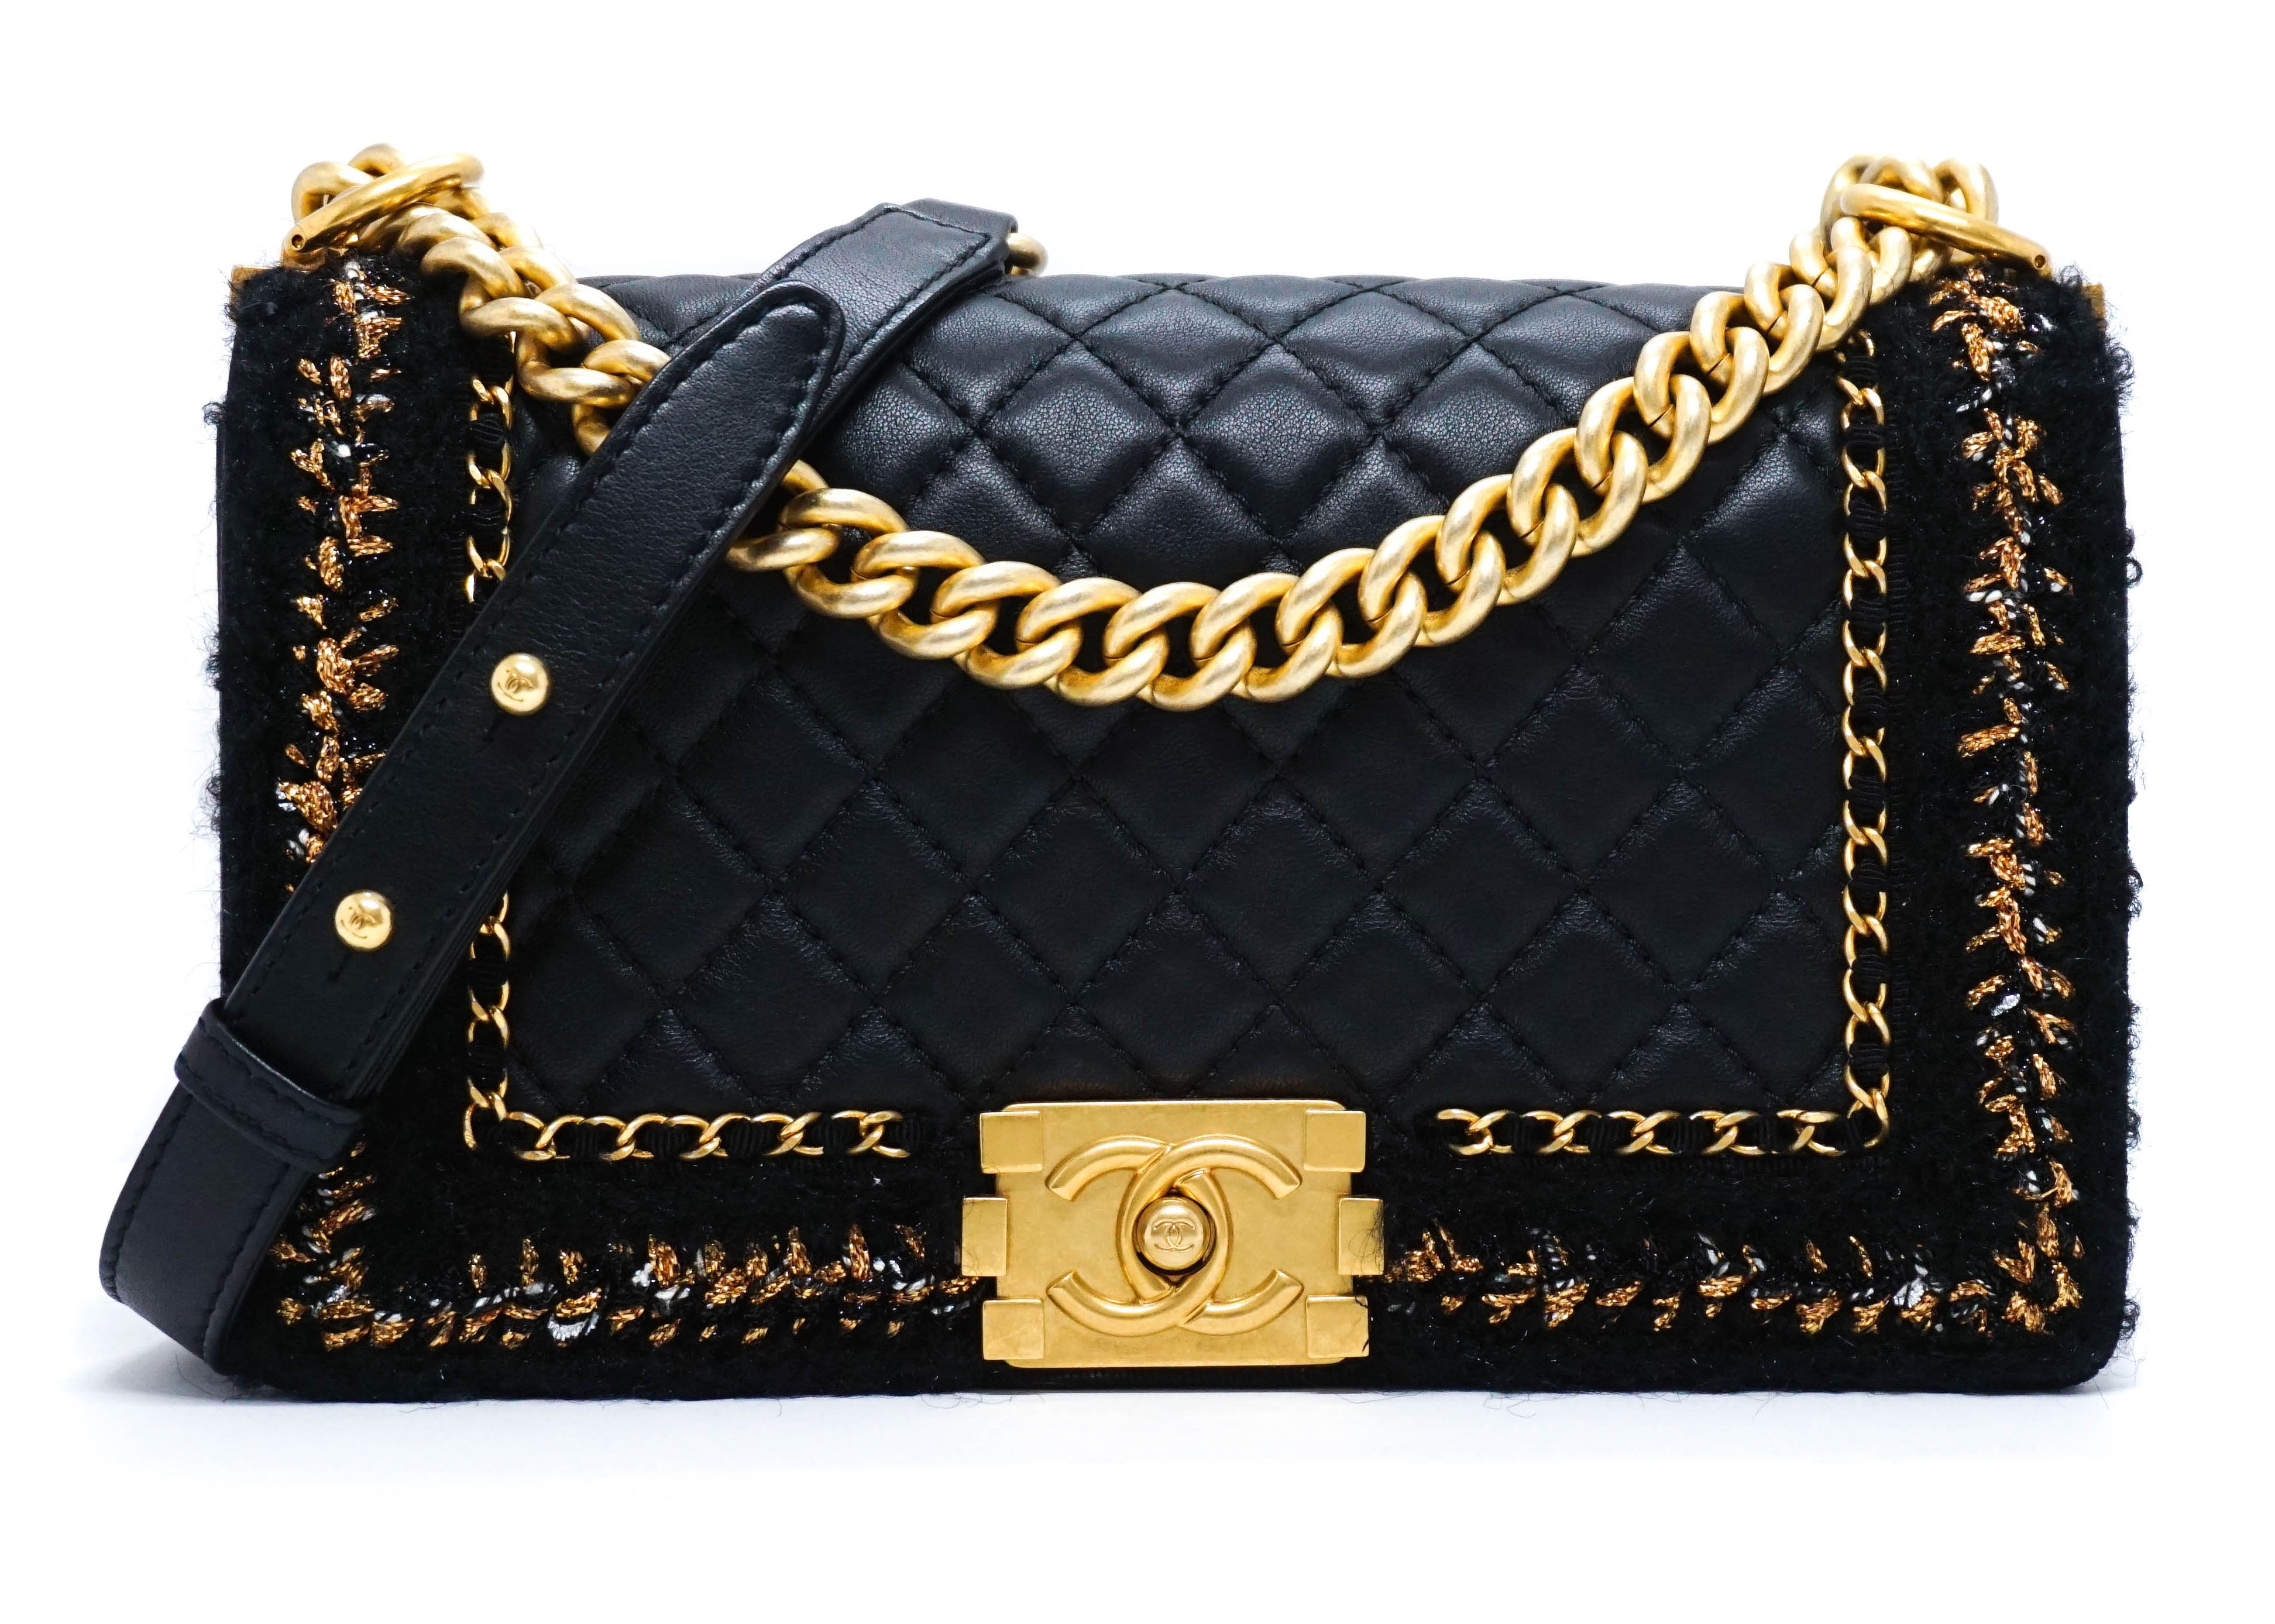 Chanel Yellow/Black Tweed Flap Bag Chanel